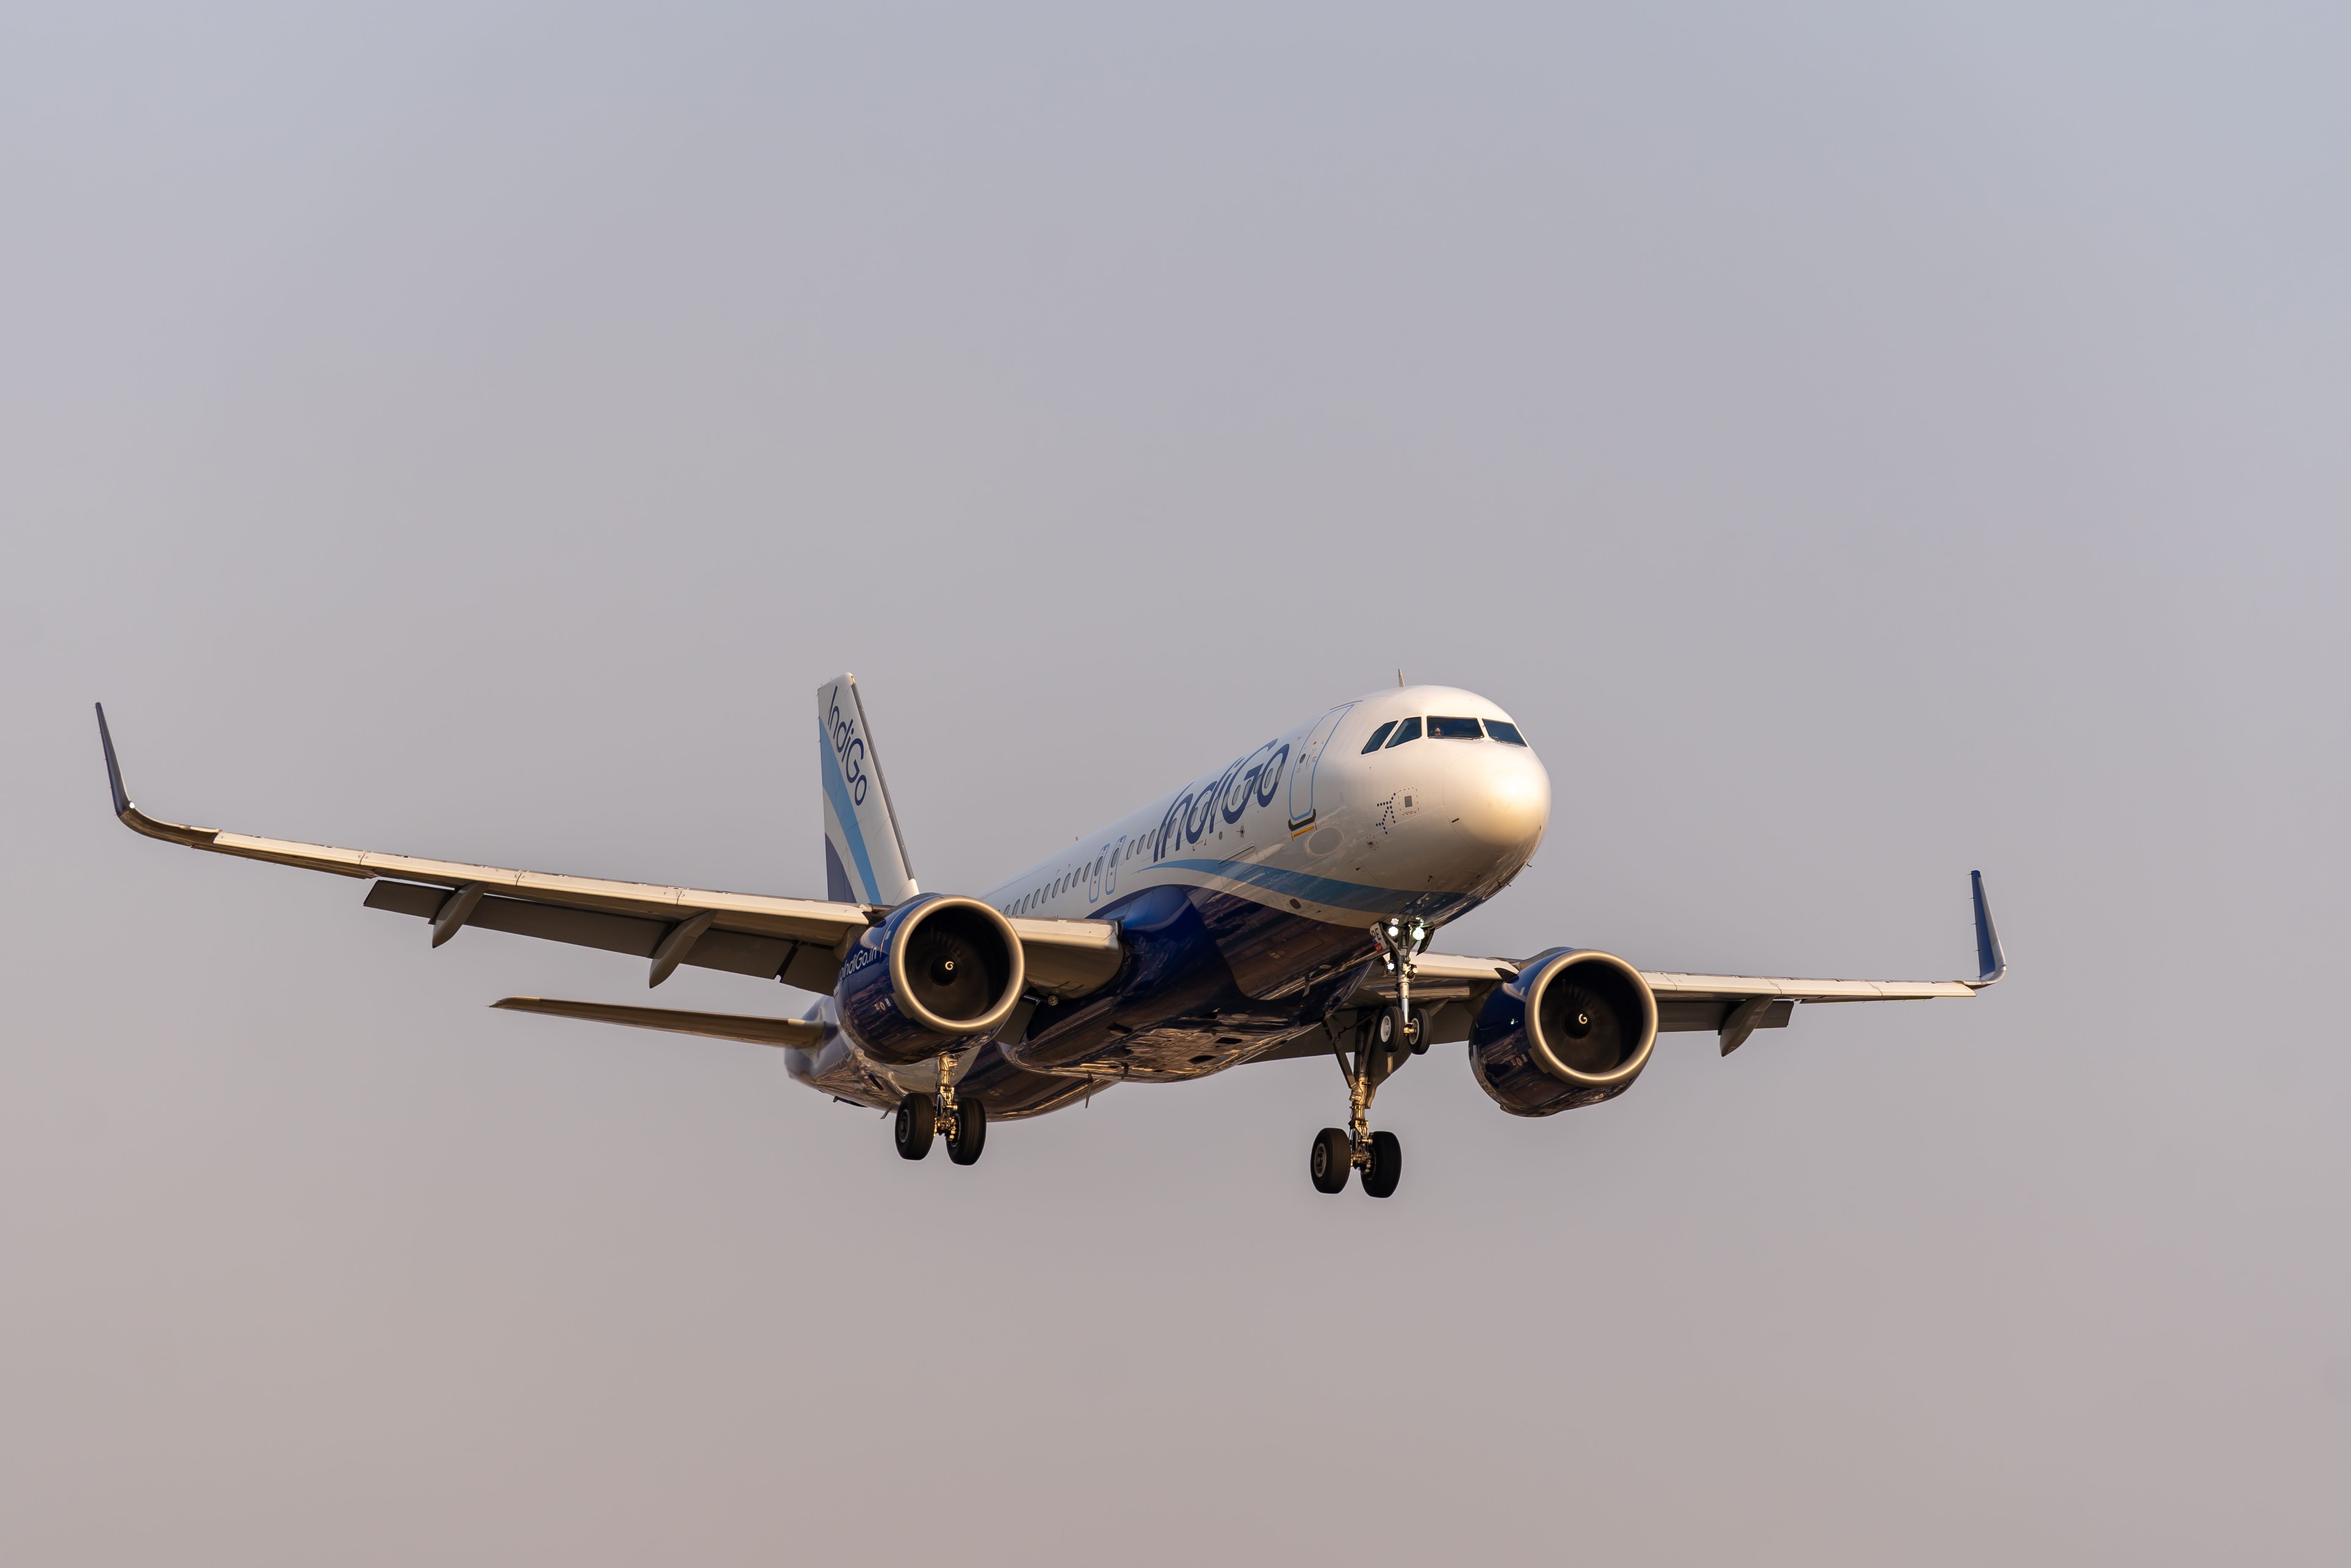 IndiGo Airbus A320neo landing at Chhatrapati Shivaji Maharaj International Airport.